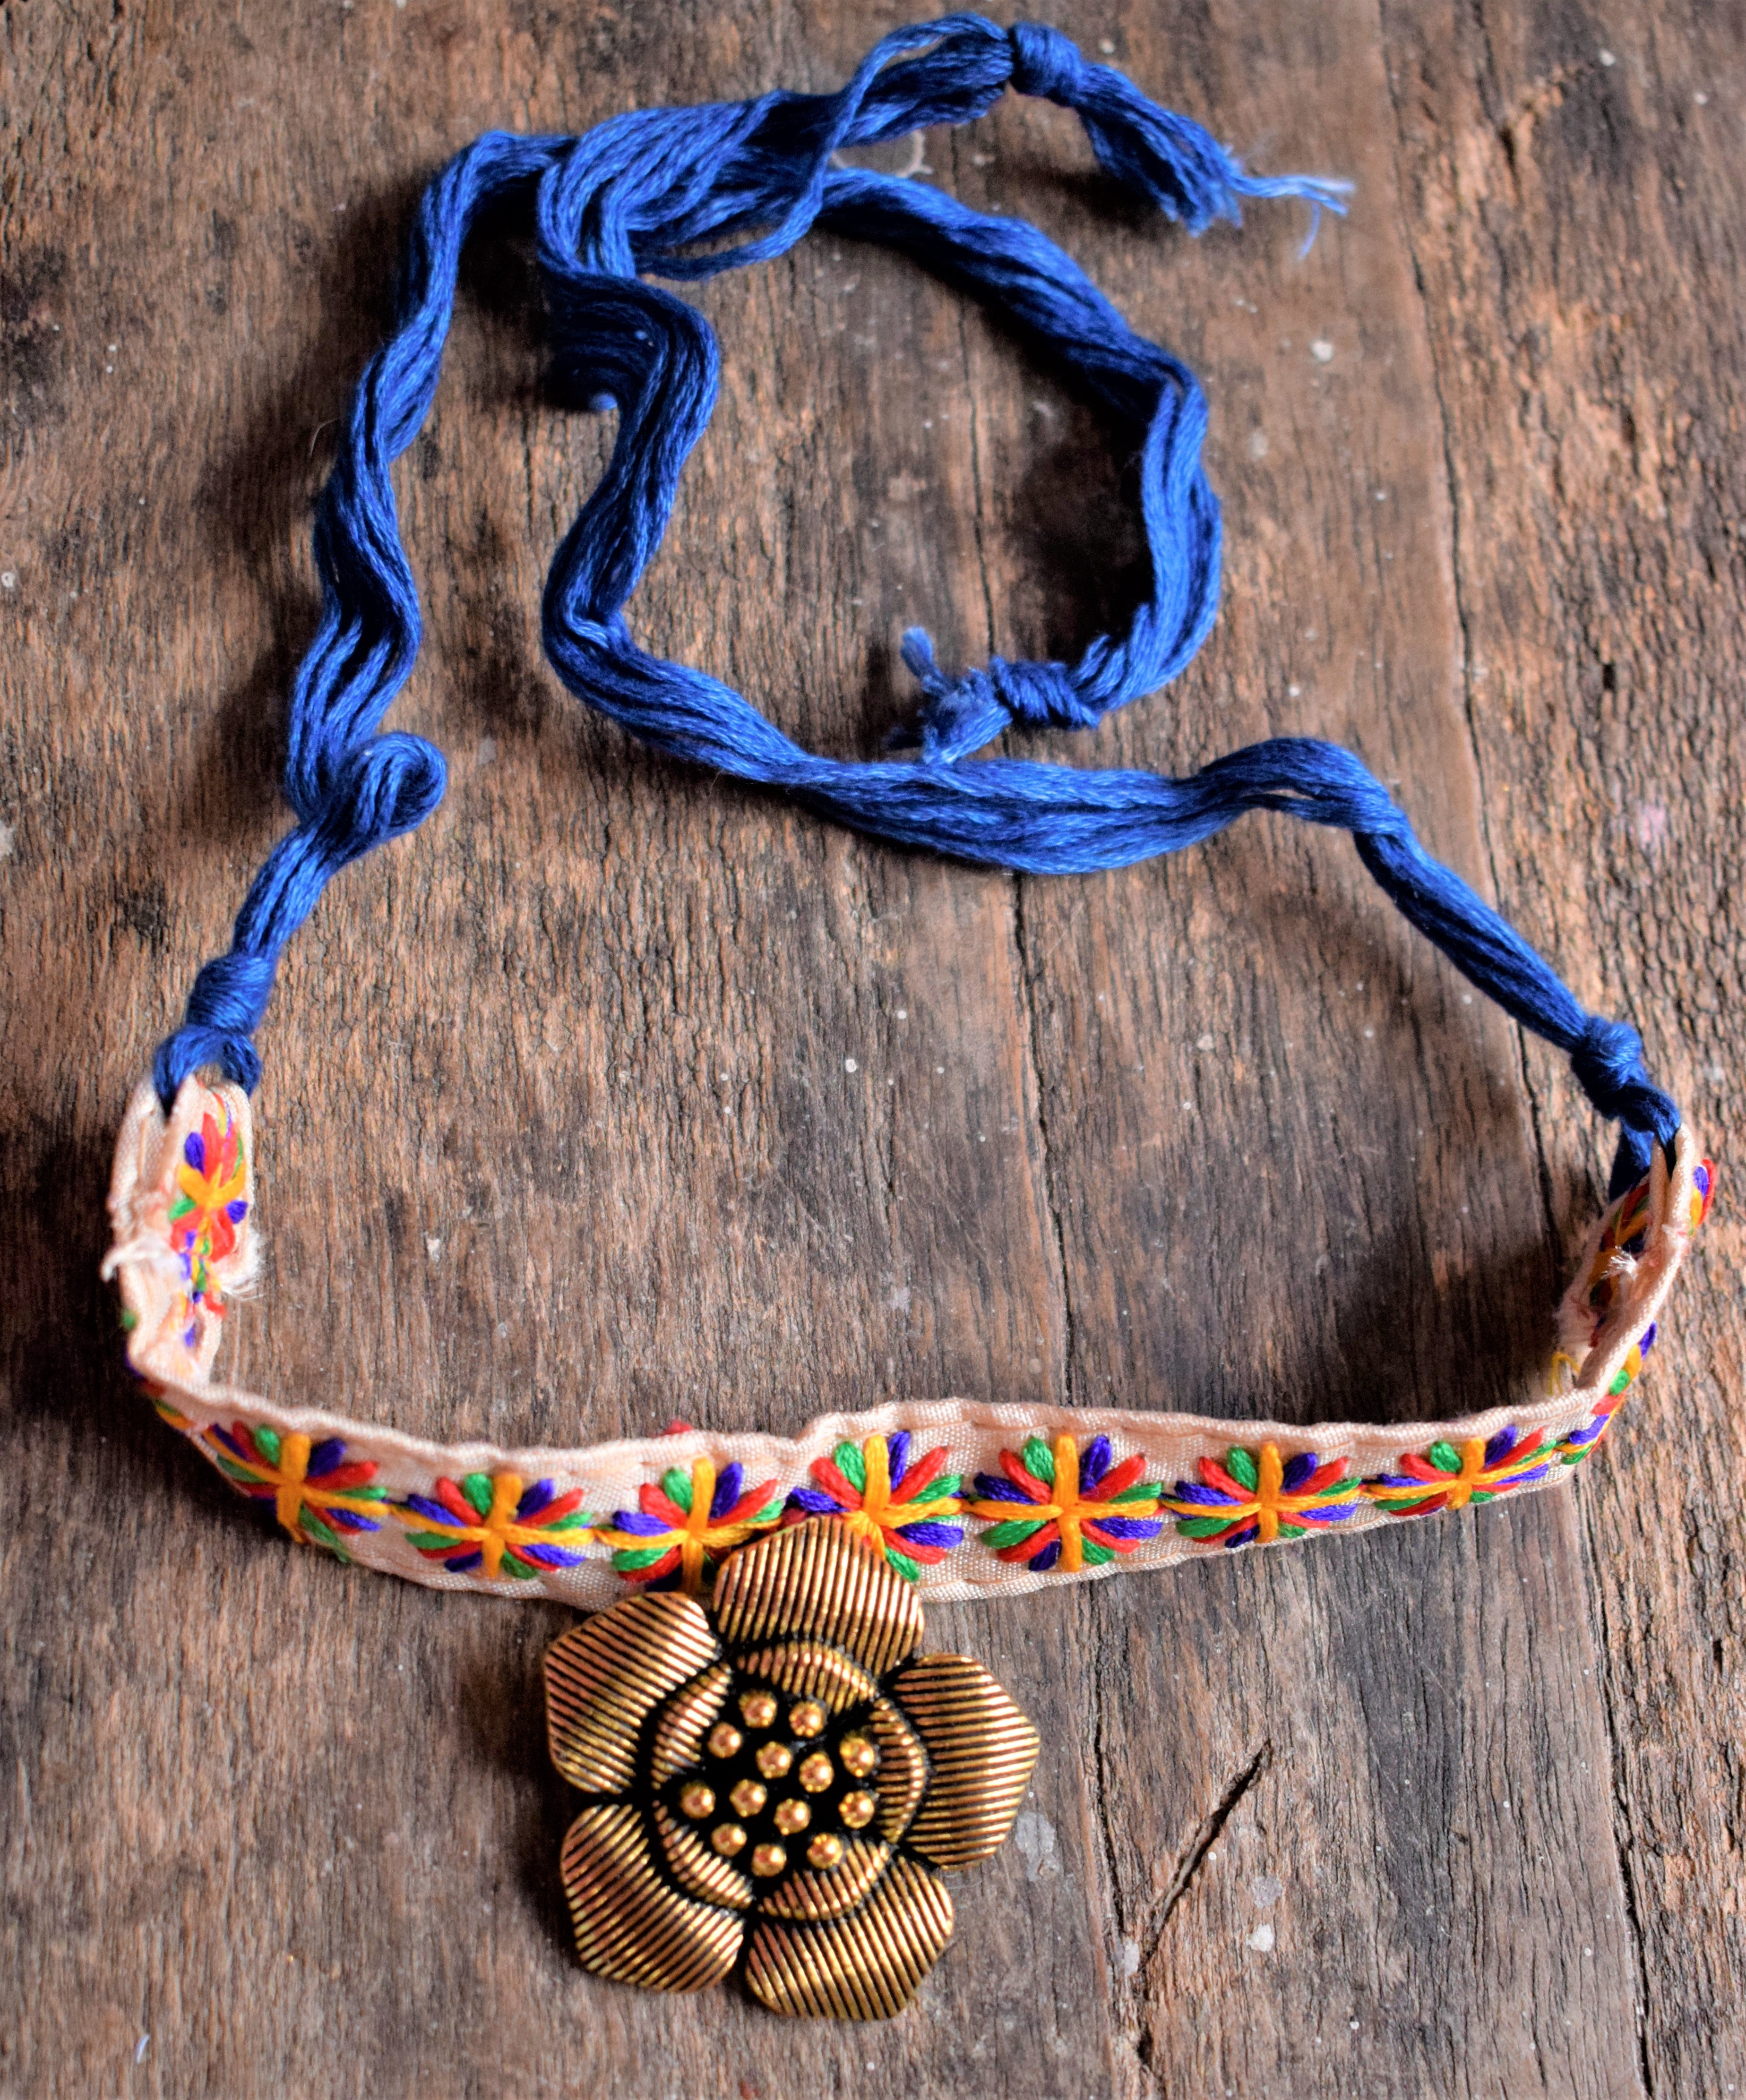 Circular Design Fabric Necklace